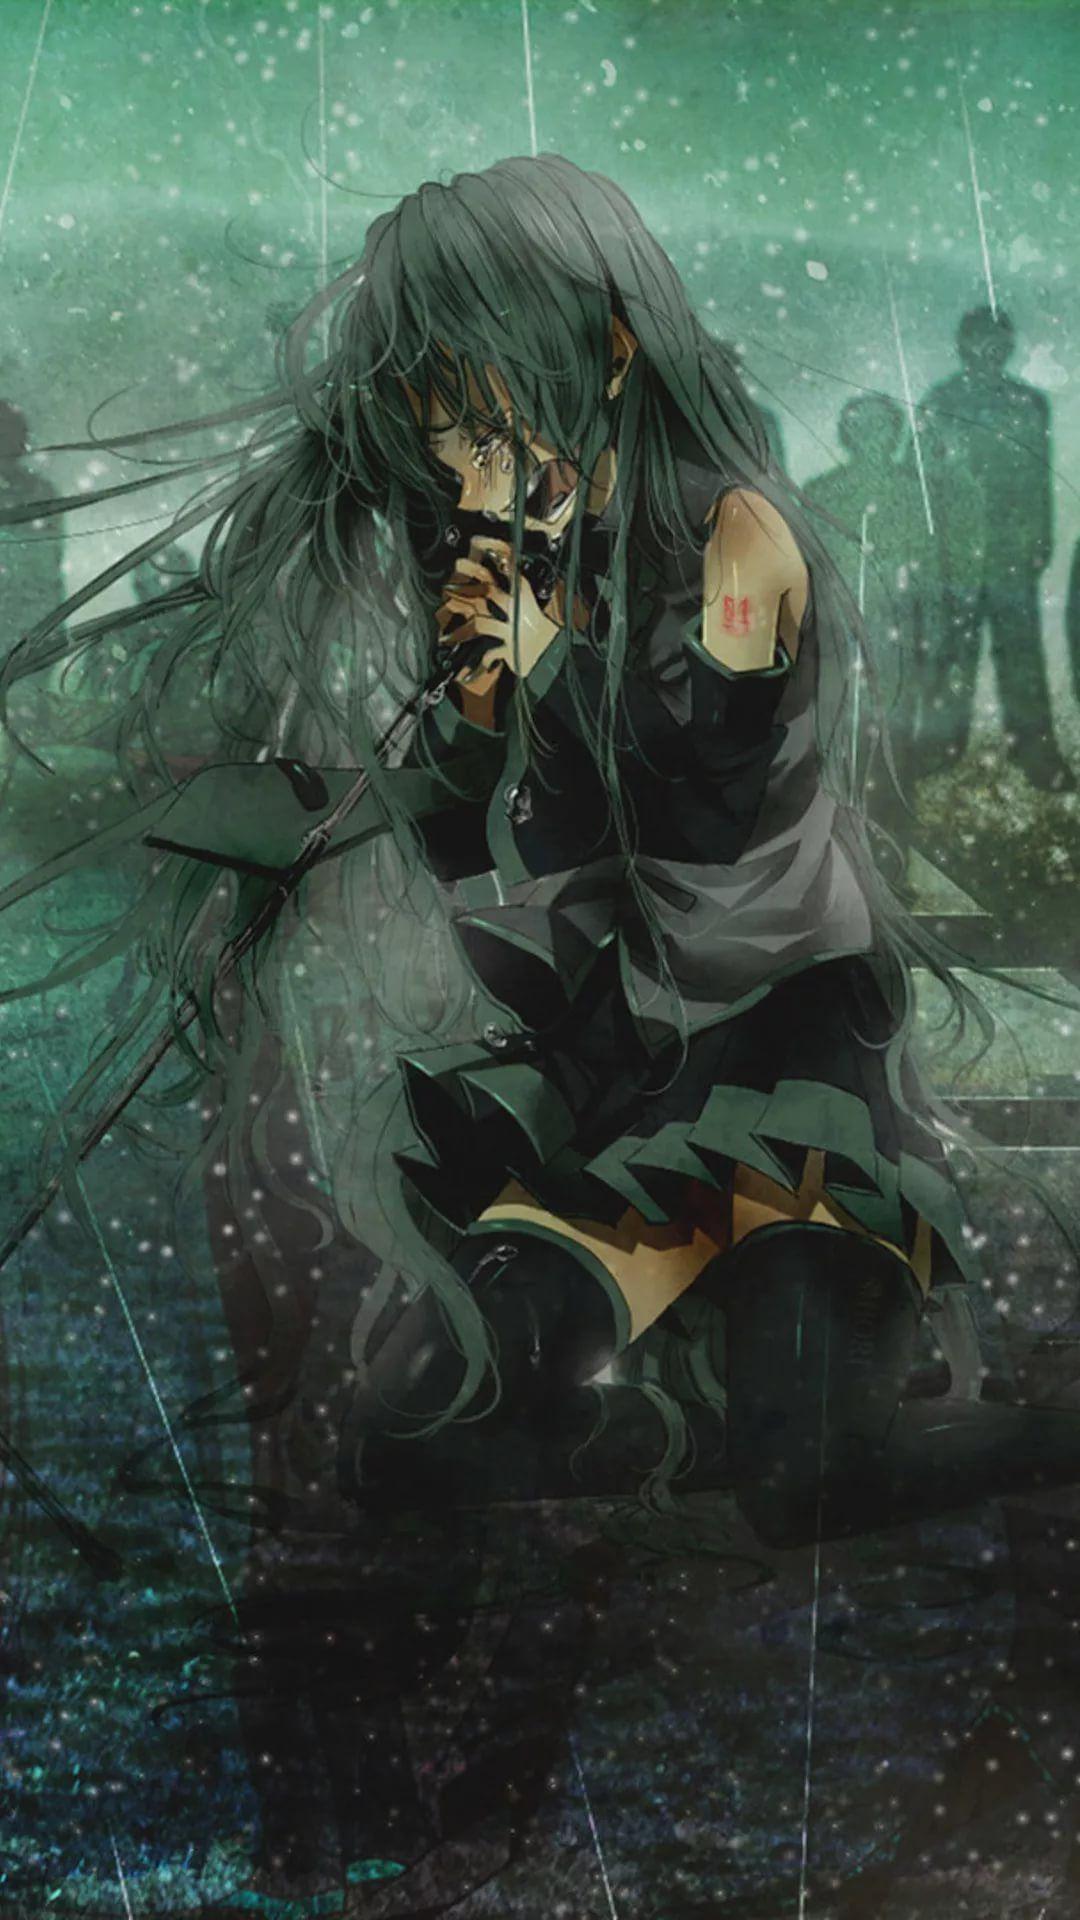 Aesthetic Sad Anime Girl Wallpapers - Top Free Aesthetic Sad Anime Girl Backgrounds ...